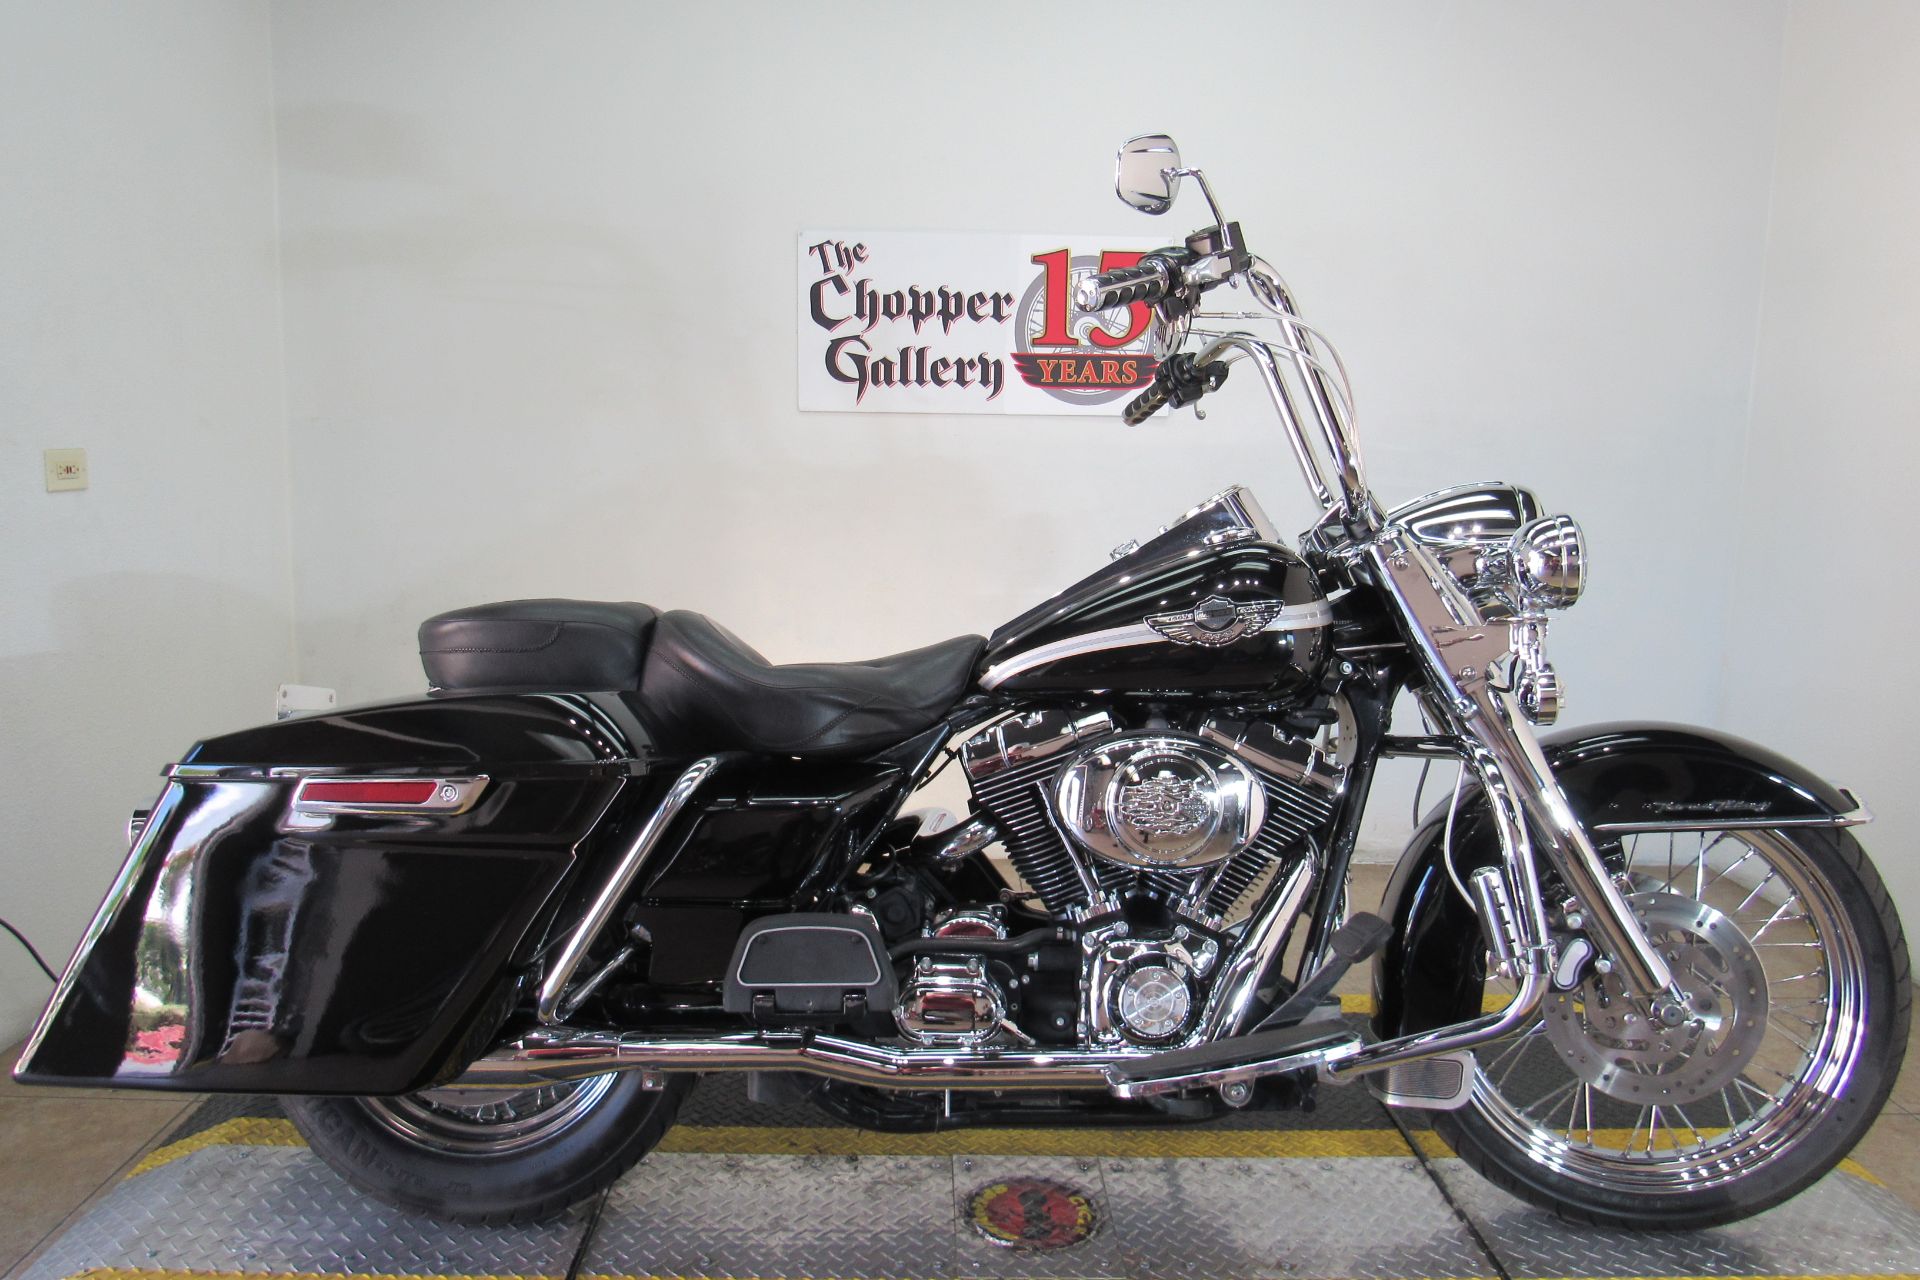 2003 Harley-Davidson FLHRCI Road King® Classic in Temecula, California - Photo 1